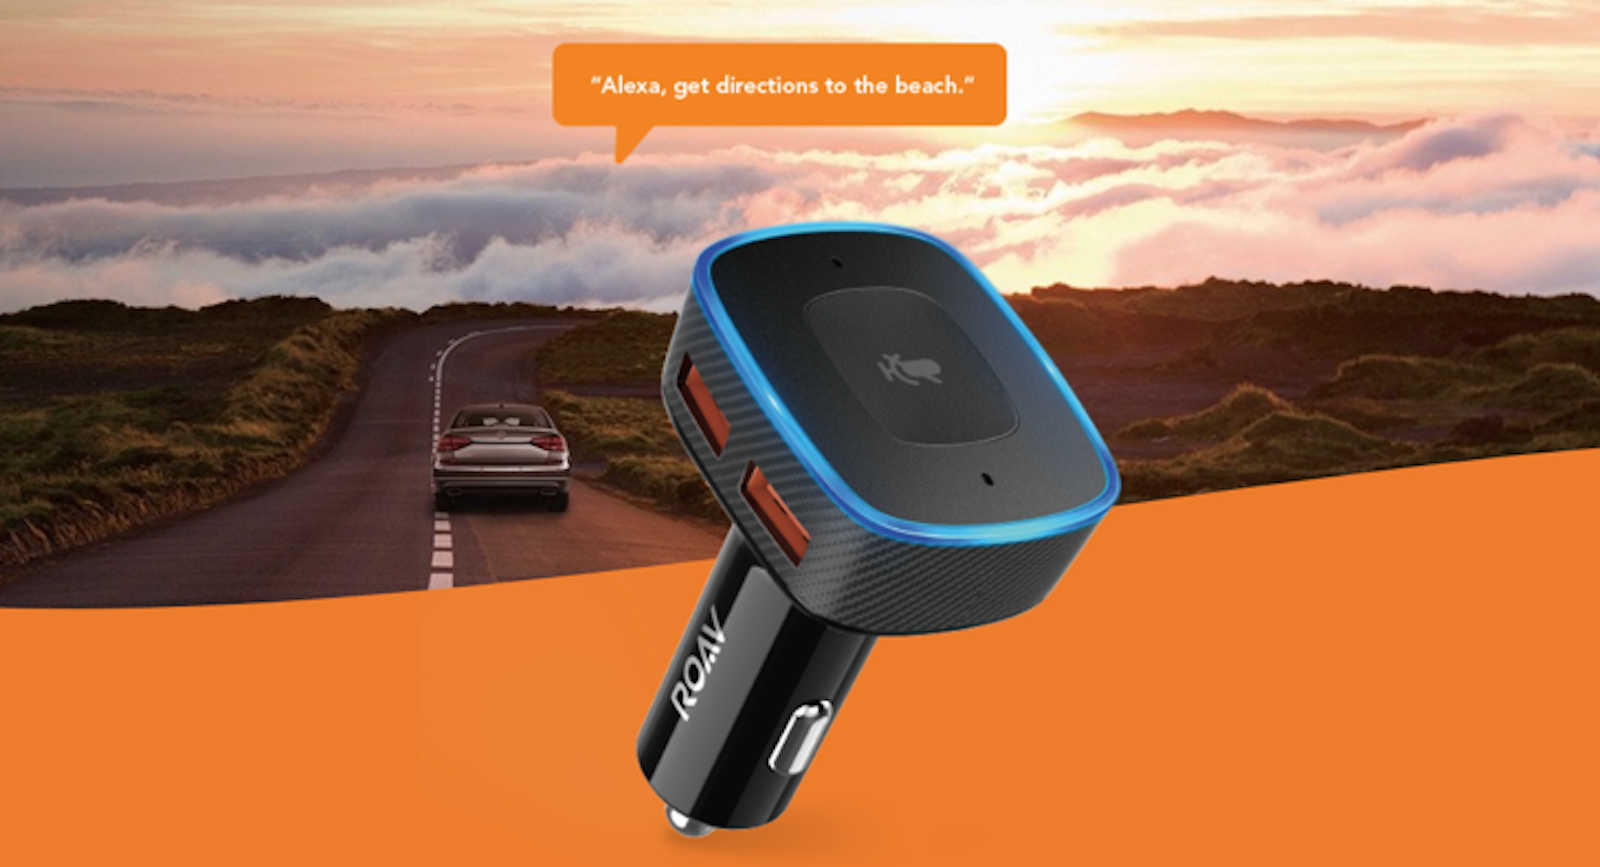 Berita, anker road viva Amazon alexa: Trik Memasang Amazon Alexa di Mobil Kita, Cukup Murah Lho